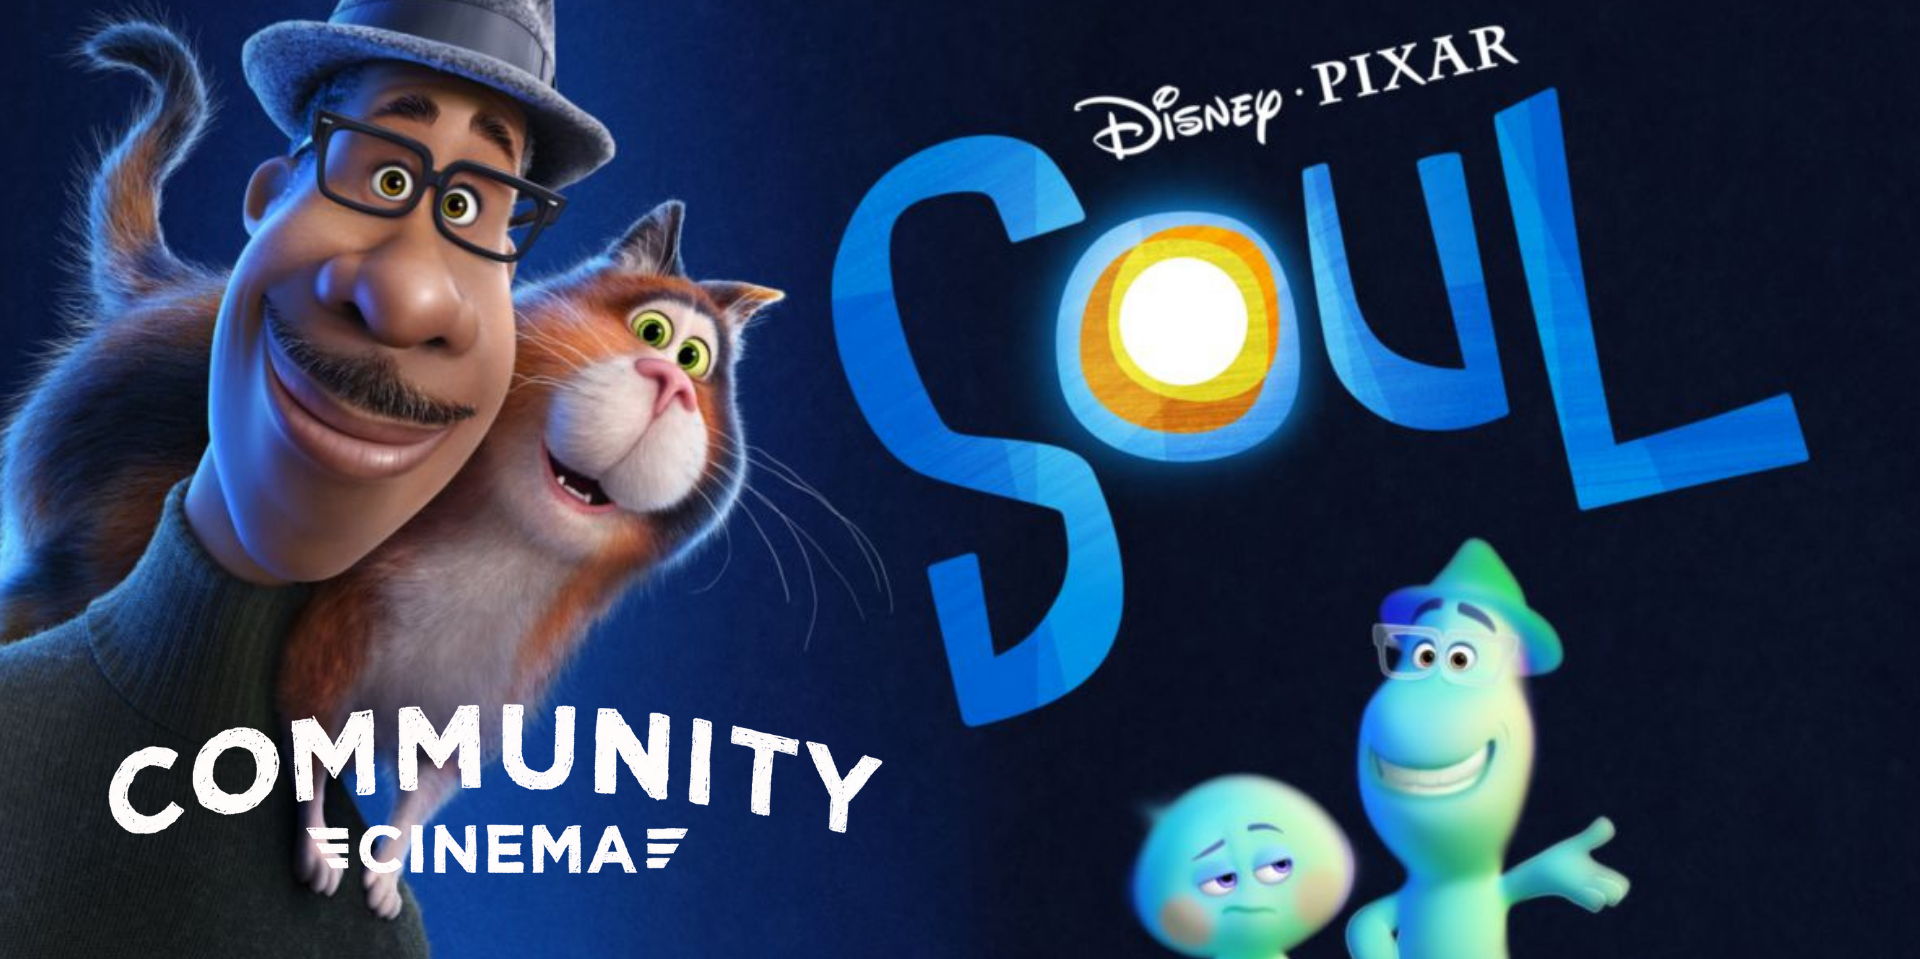 Disney/Pixar's Soul (2020) - Community Cinema & Amphitheater promotional image